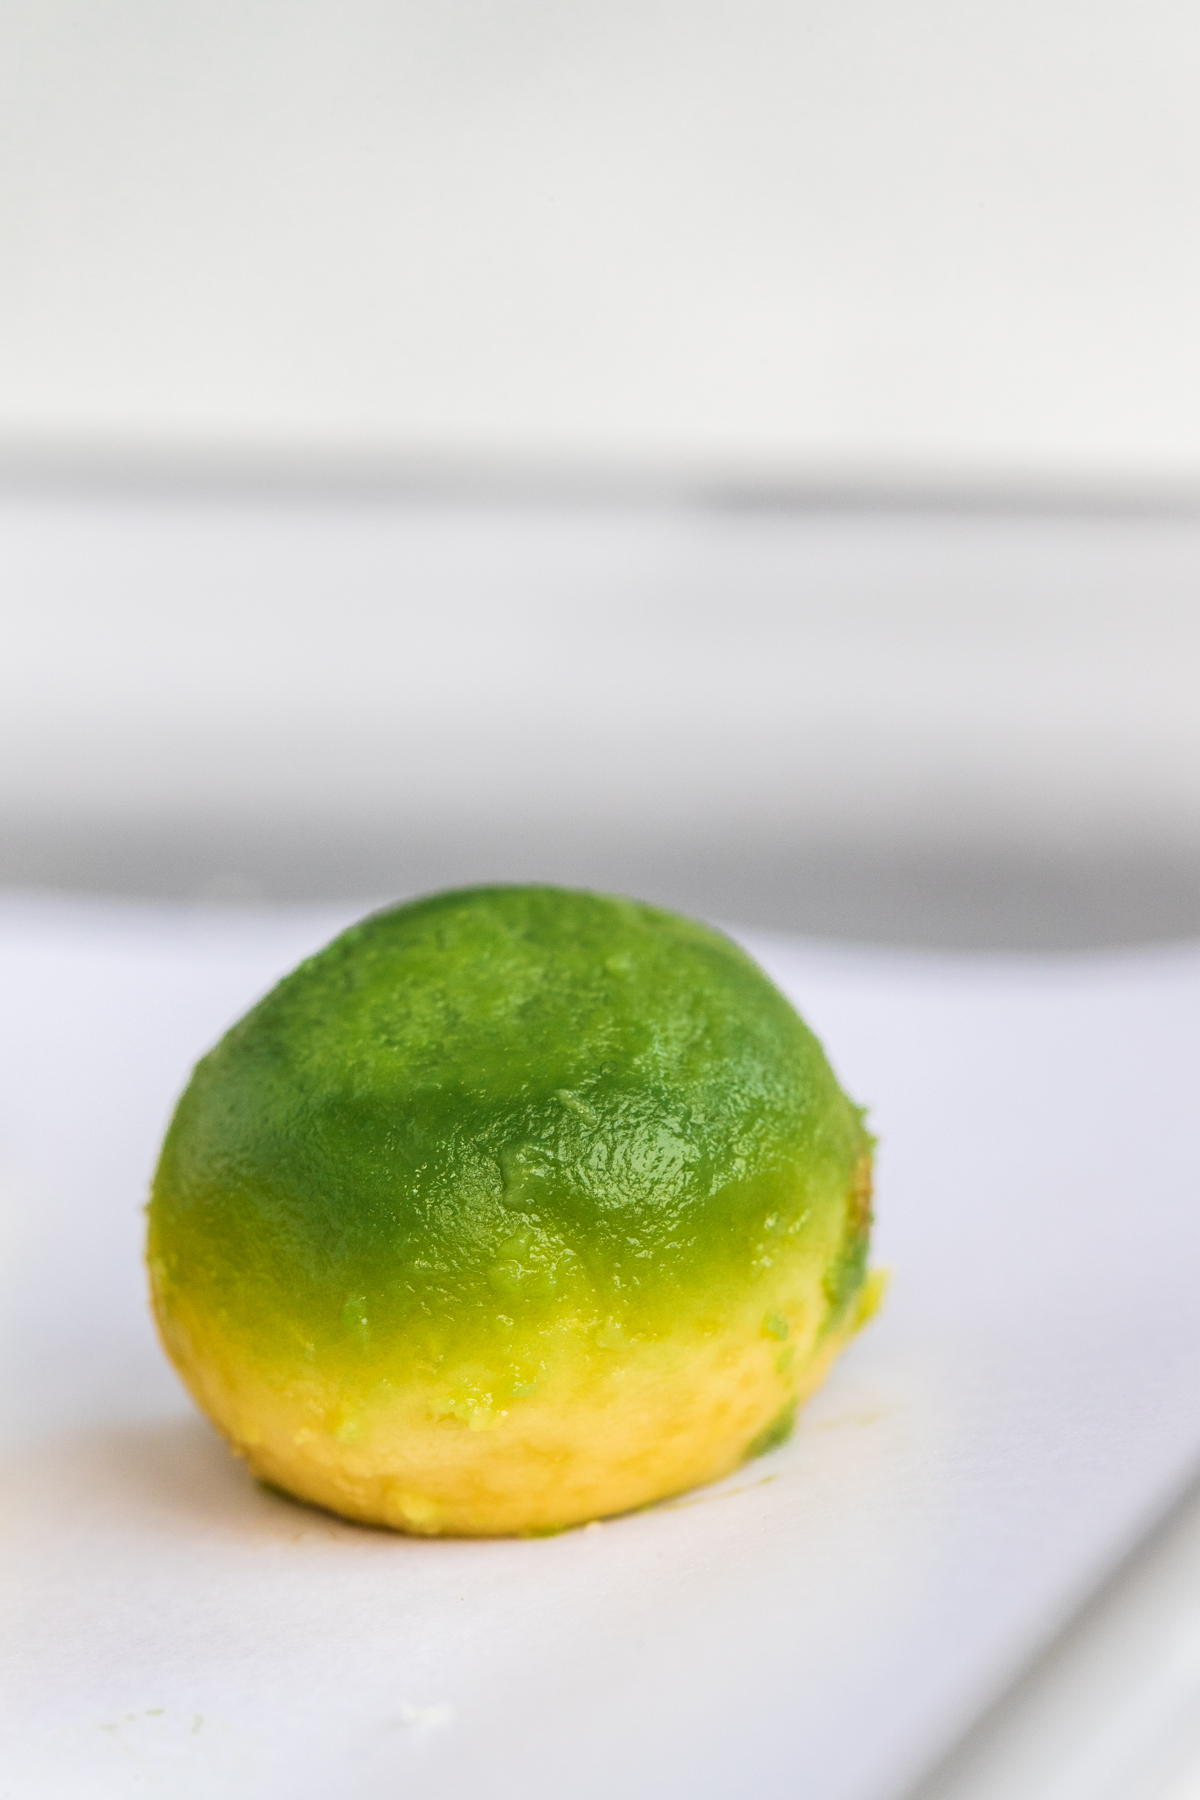 Perfect avocado ball made with a melon baller, on a white background